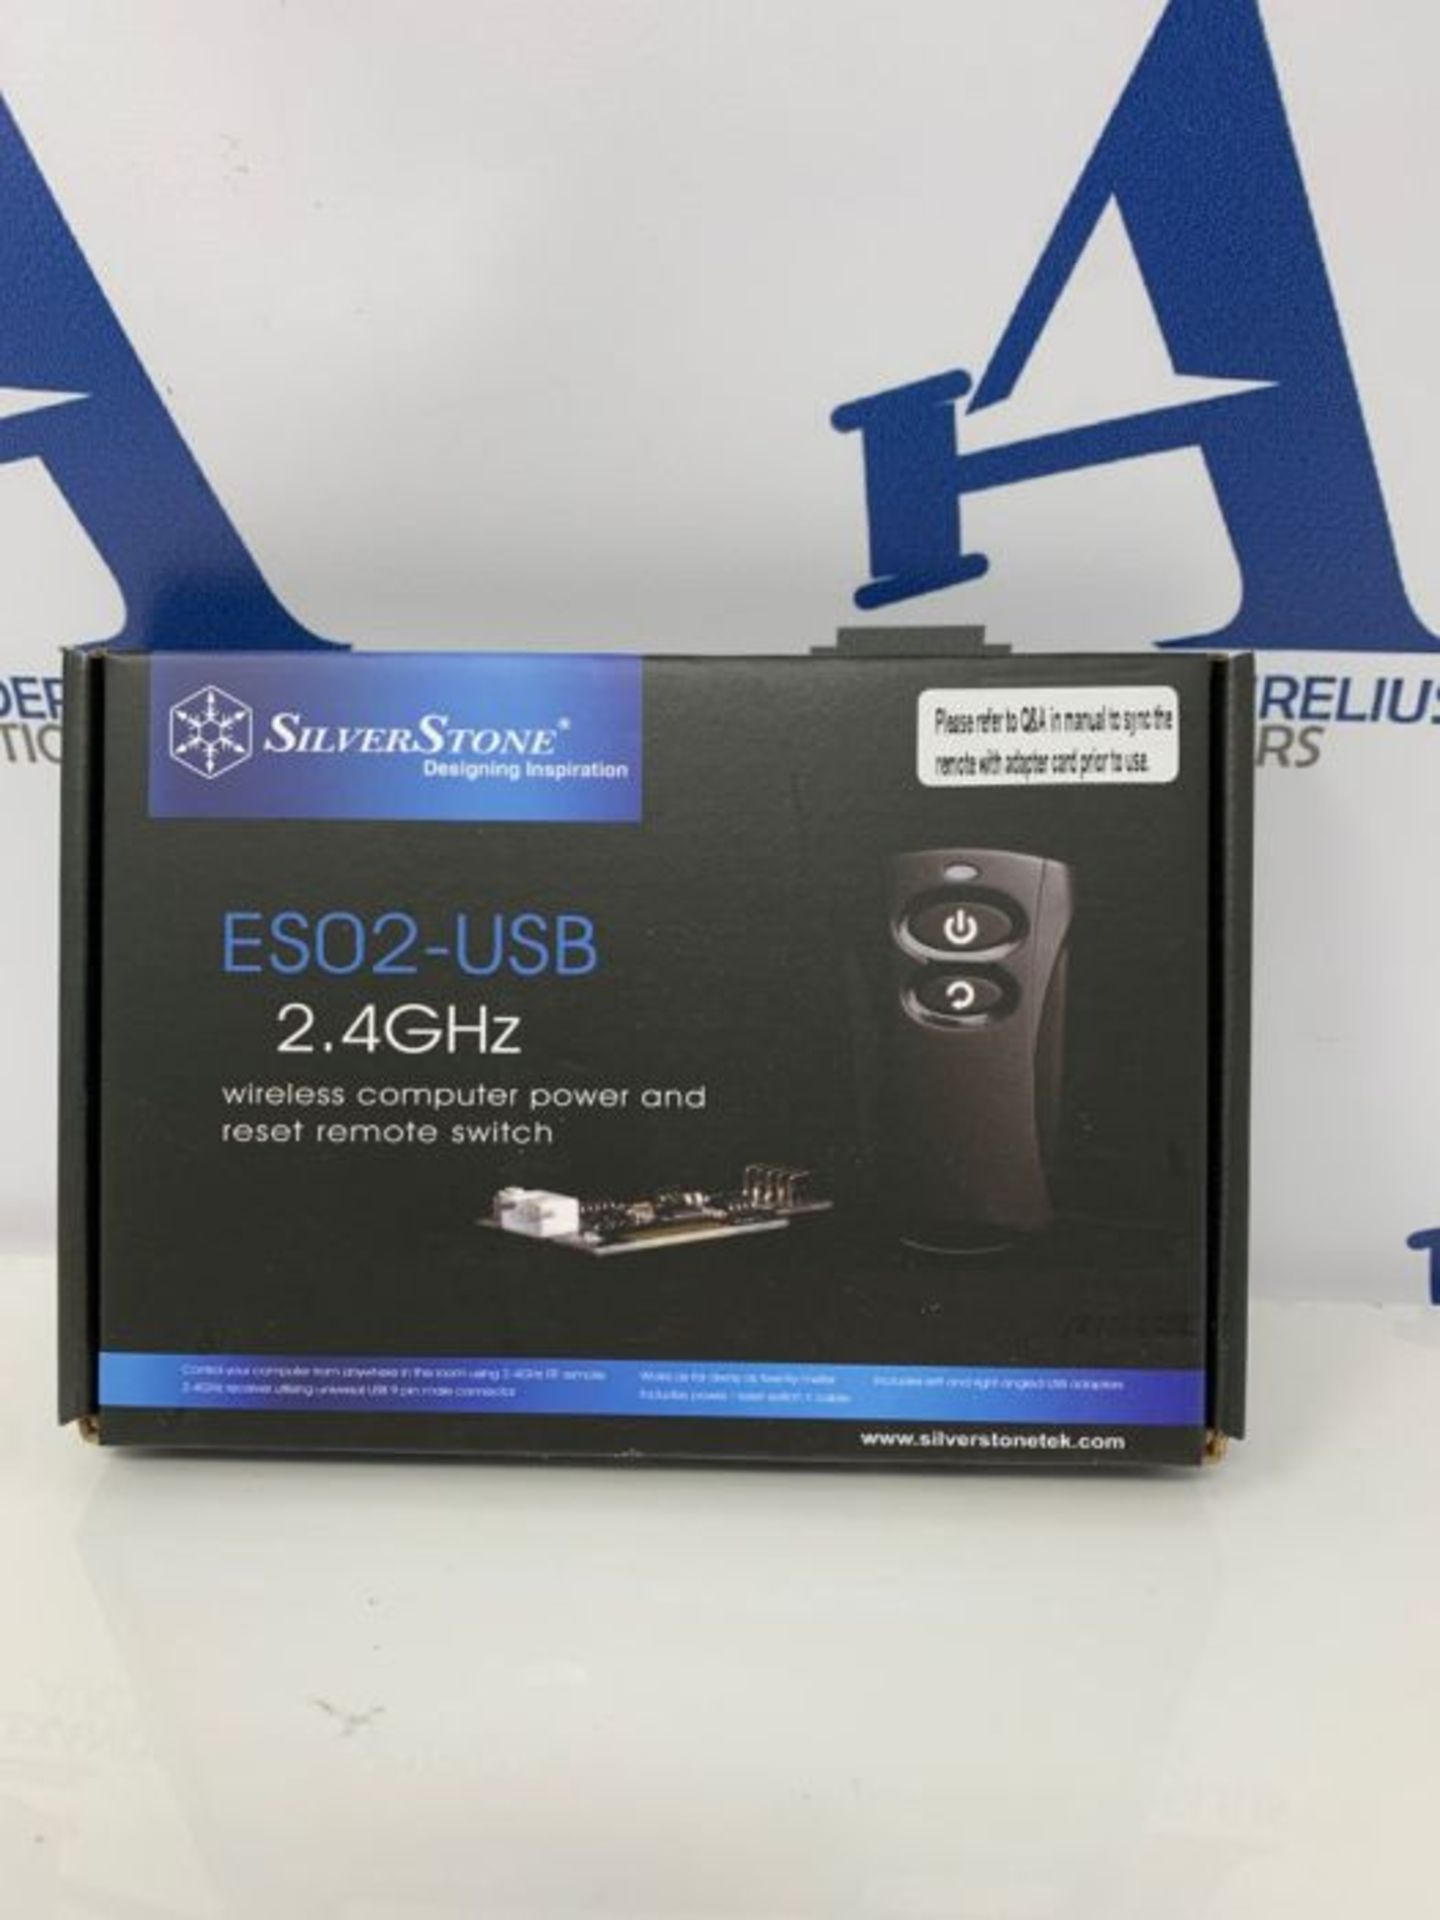 SilverStone SST-ES02-USB - 2.4G Funk-Fernbedienung für PC Power / Reset, USB 2.0 9-Pi - Image 2 of 3